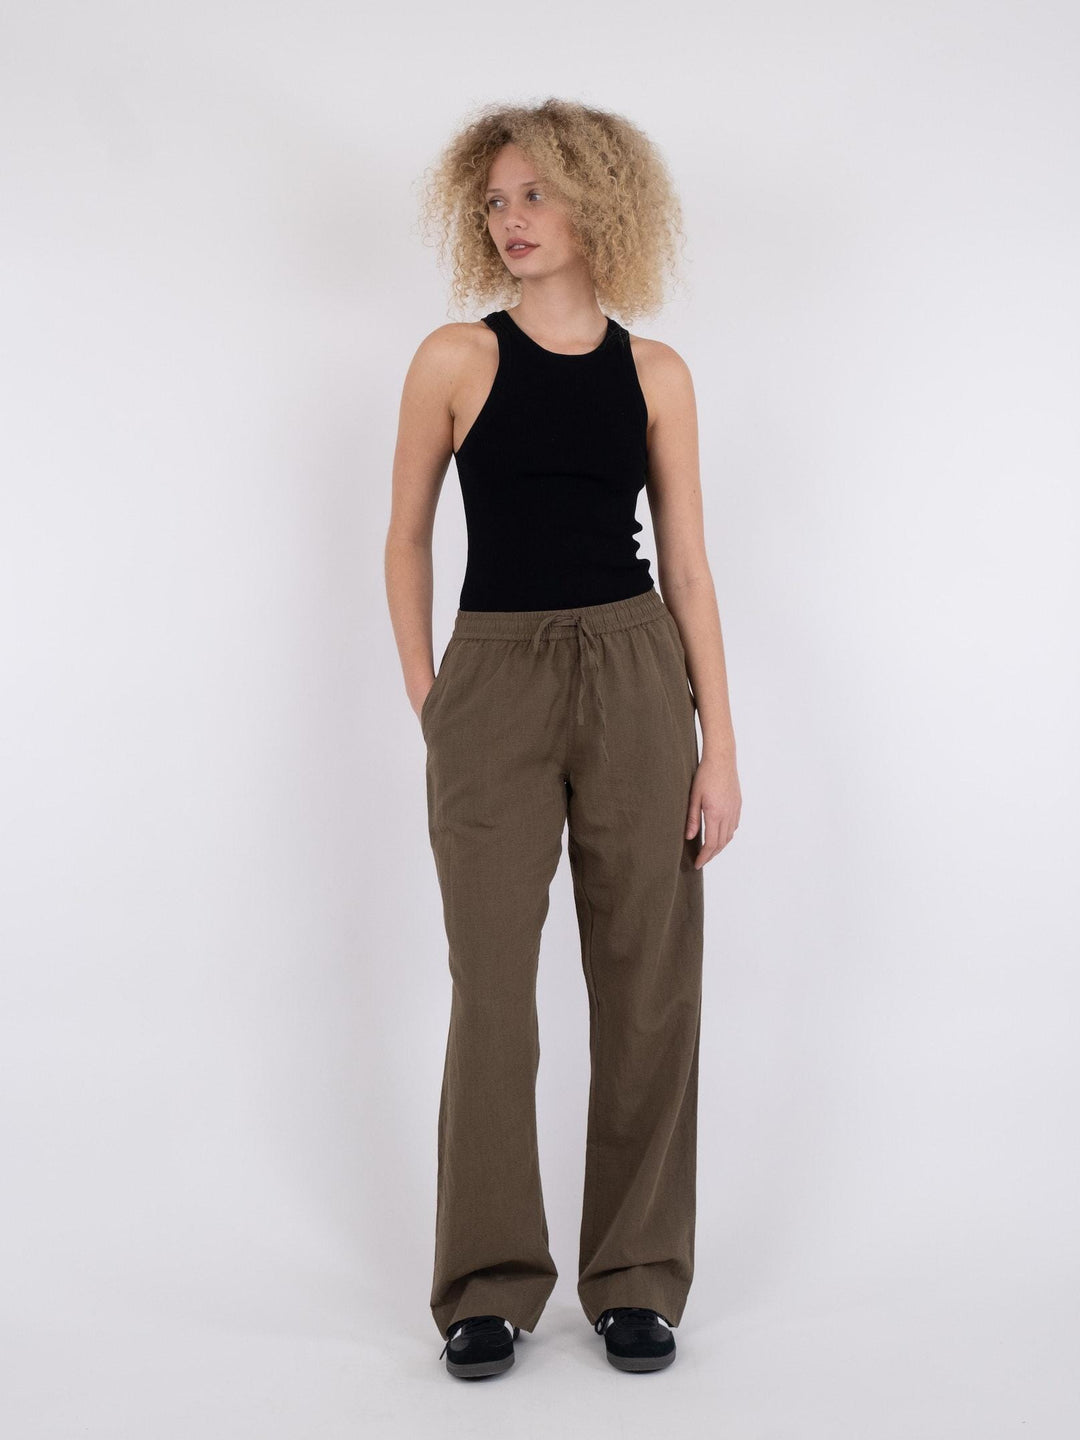 Neo Noir - Sonar Linen Pants - Army Bukser 